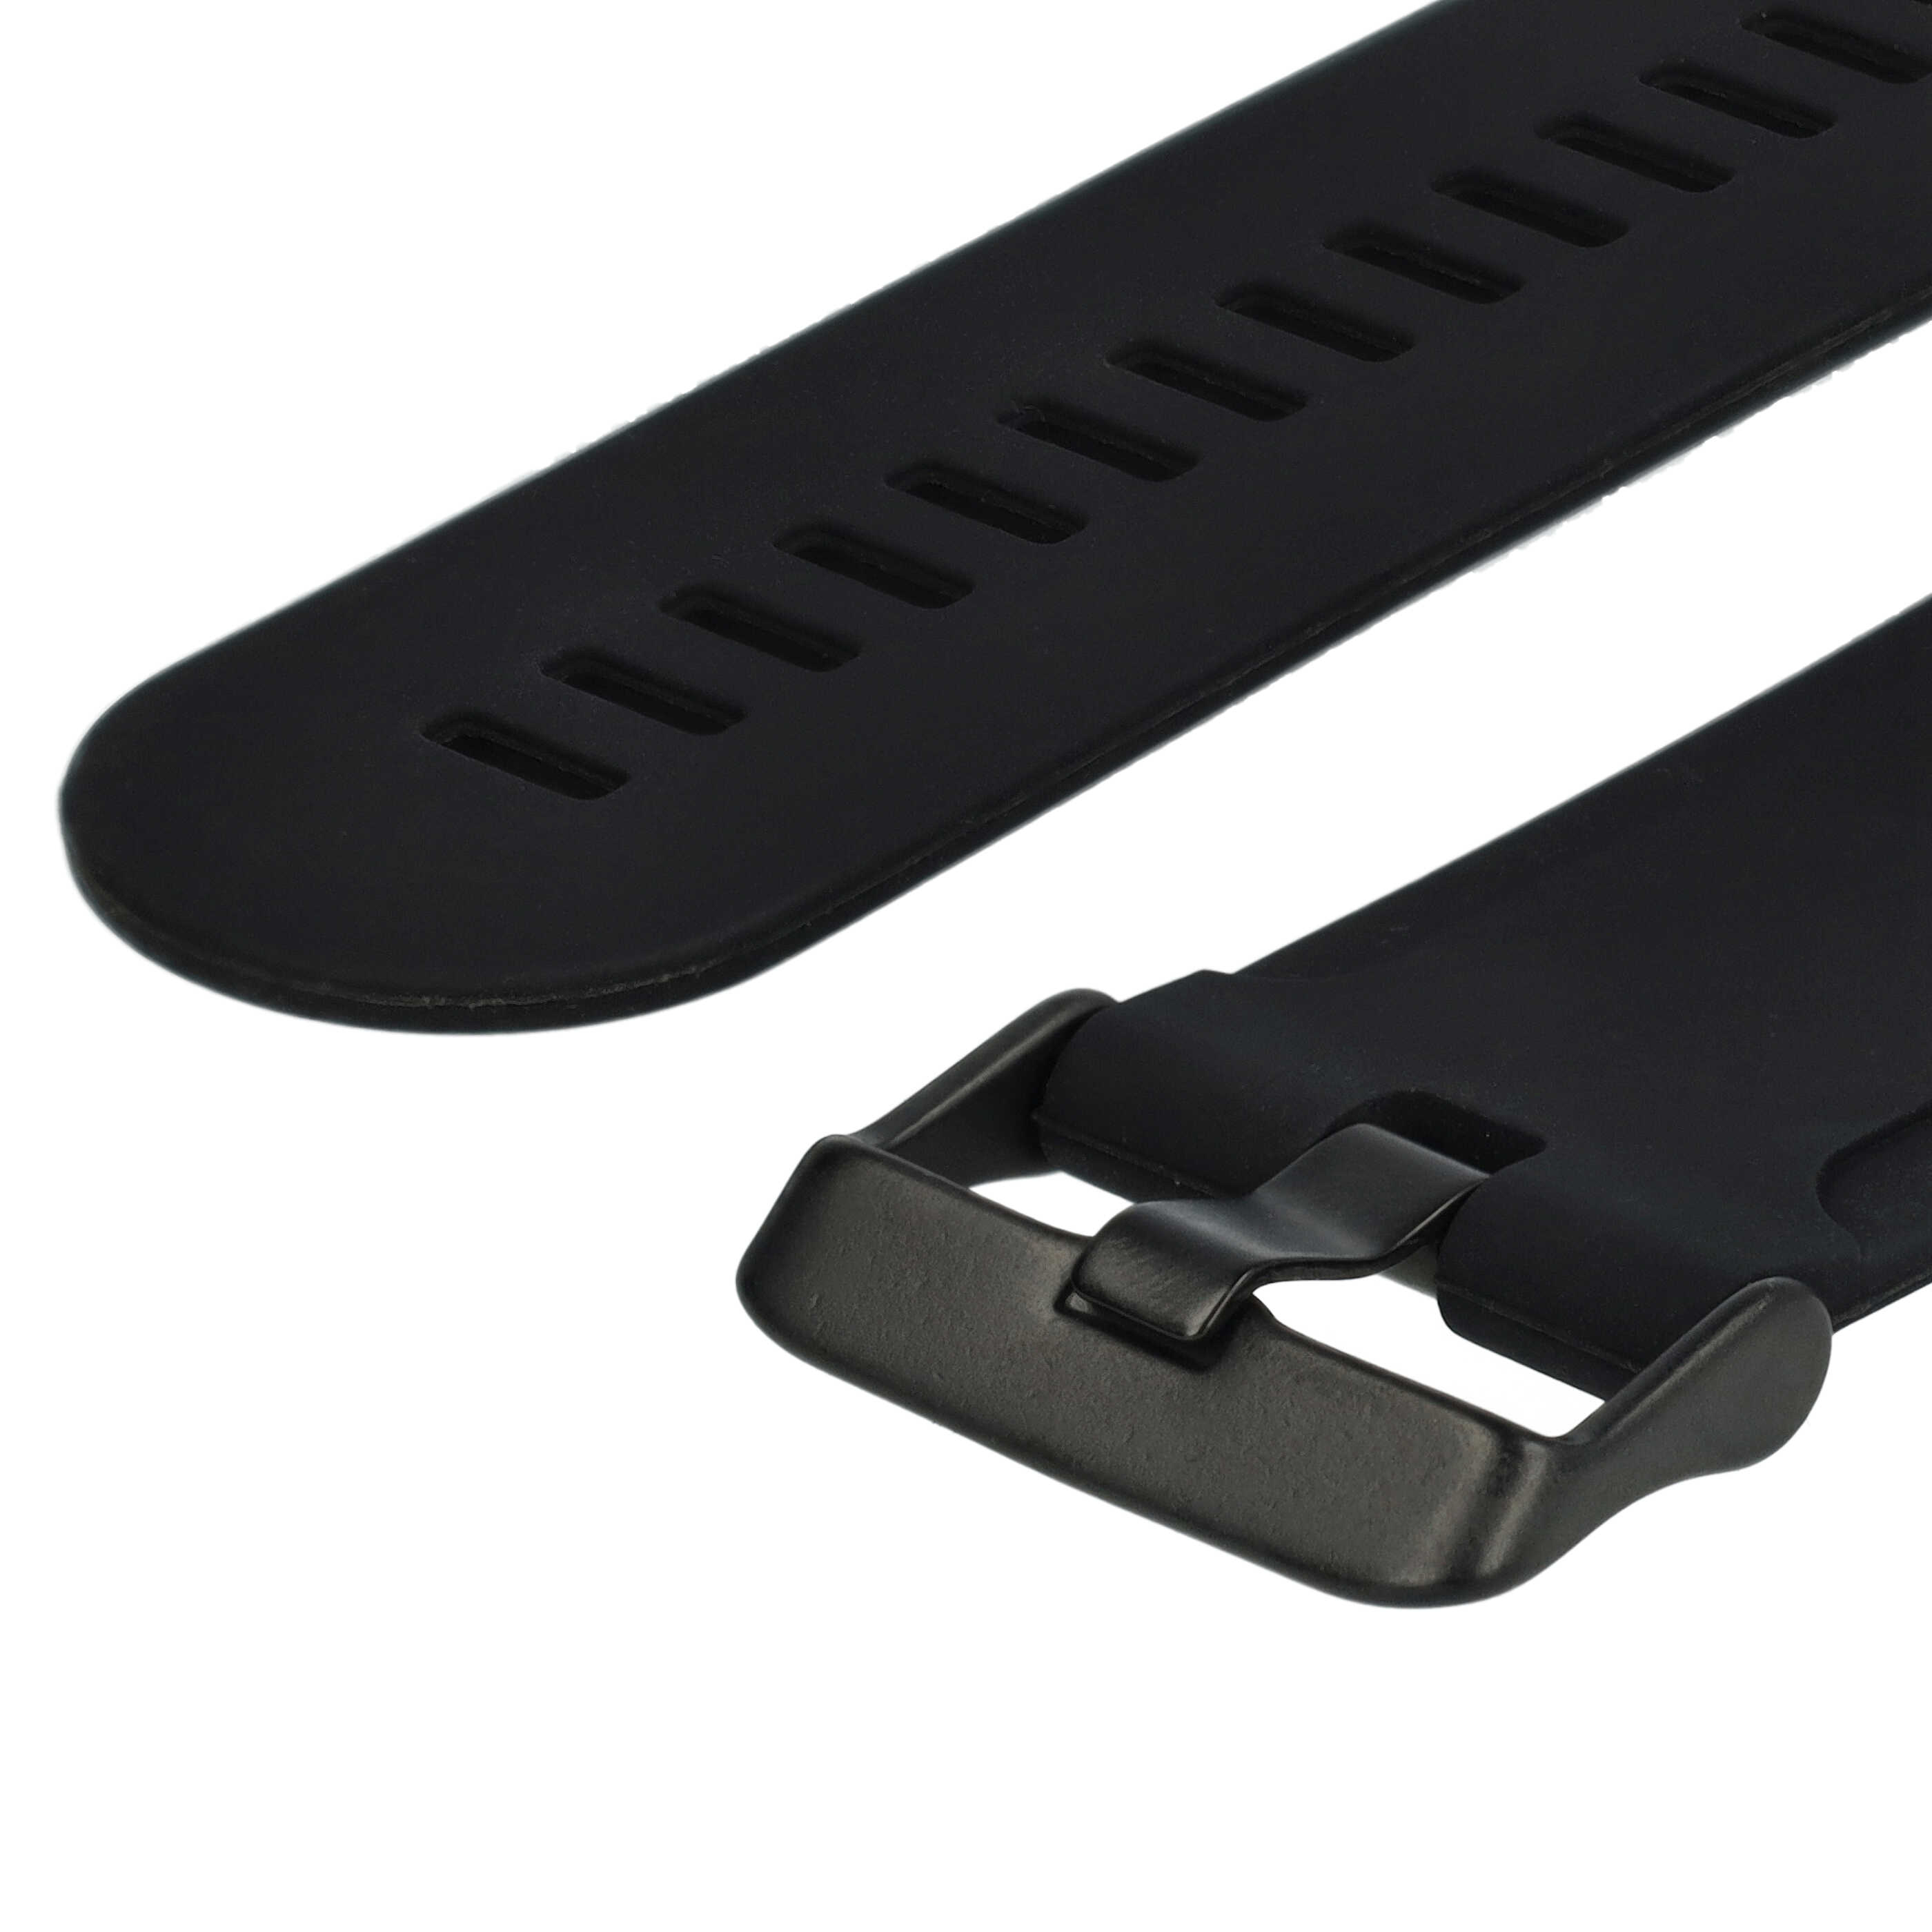 Armband L für Suunto Smartwatch - 12,5cm + 8,5 cm lang, Silikon, schwarz